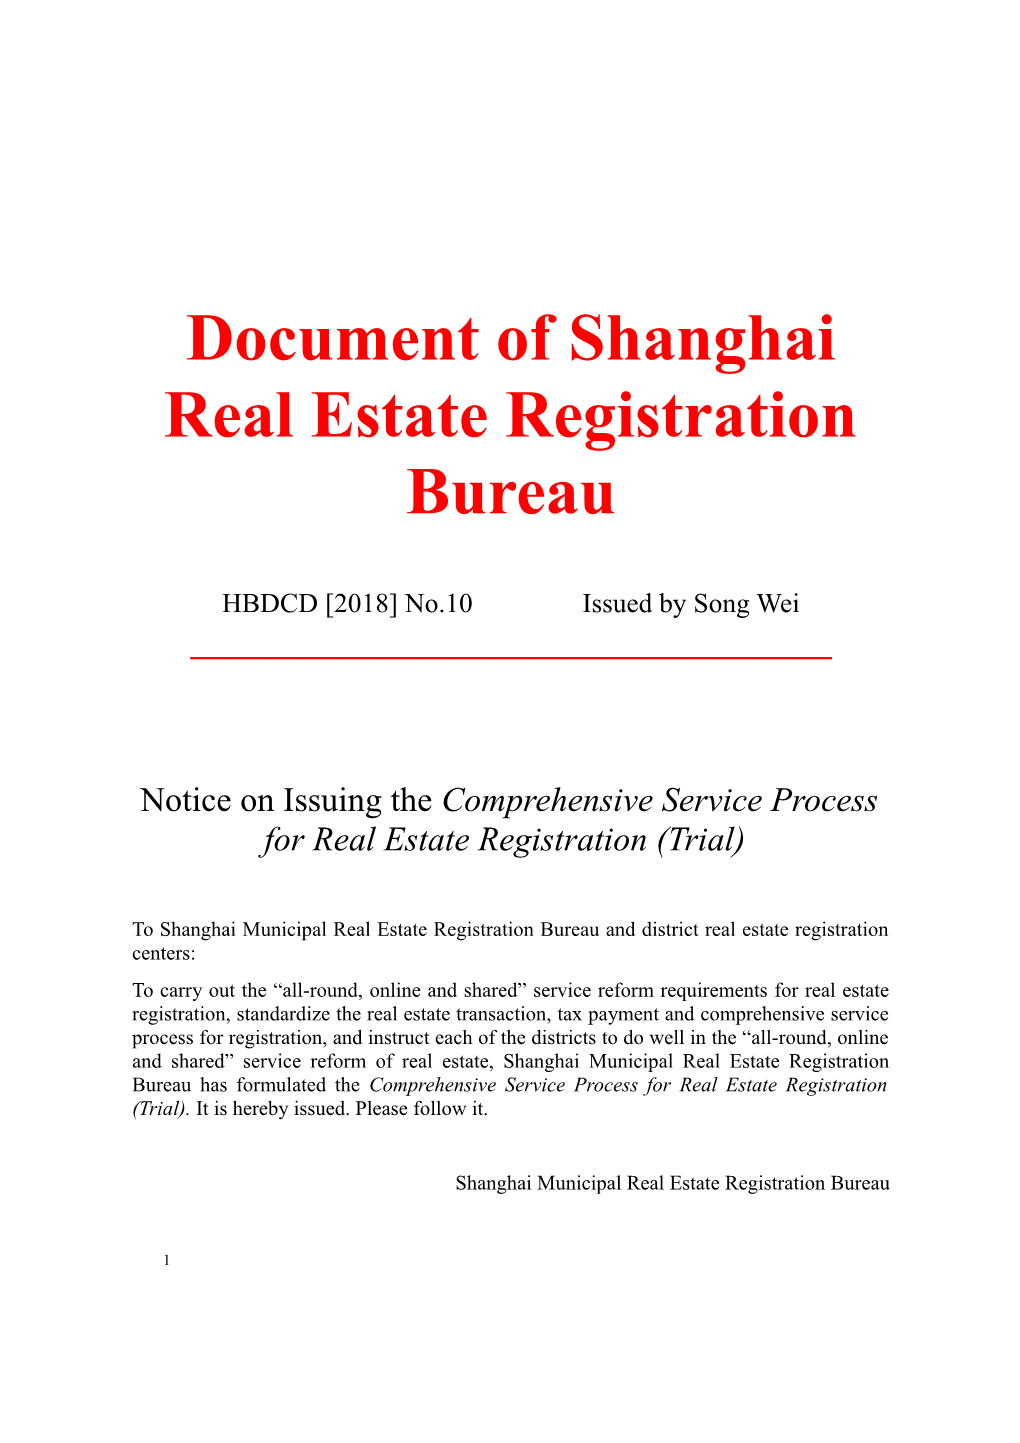 Document of Shanghai Real Estate Registration Bureau